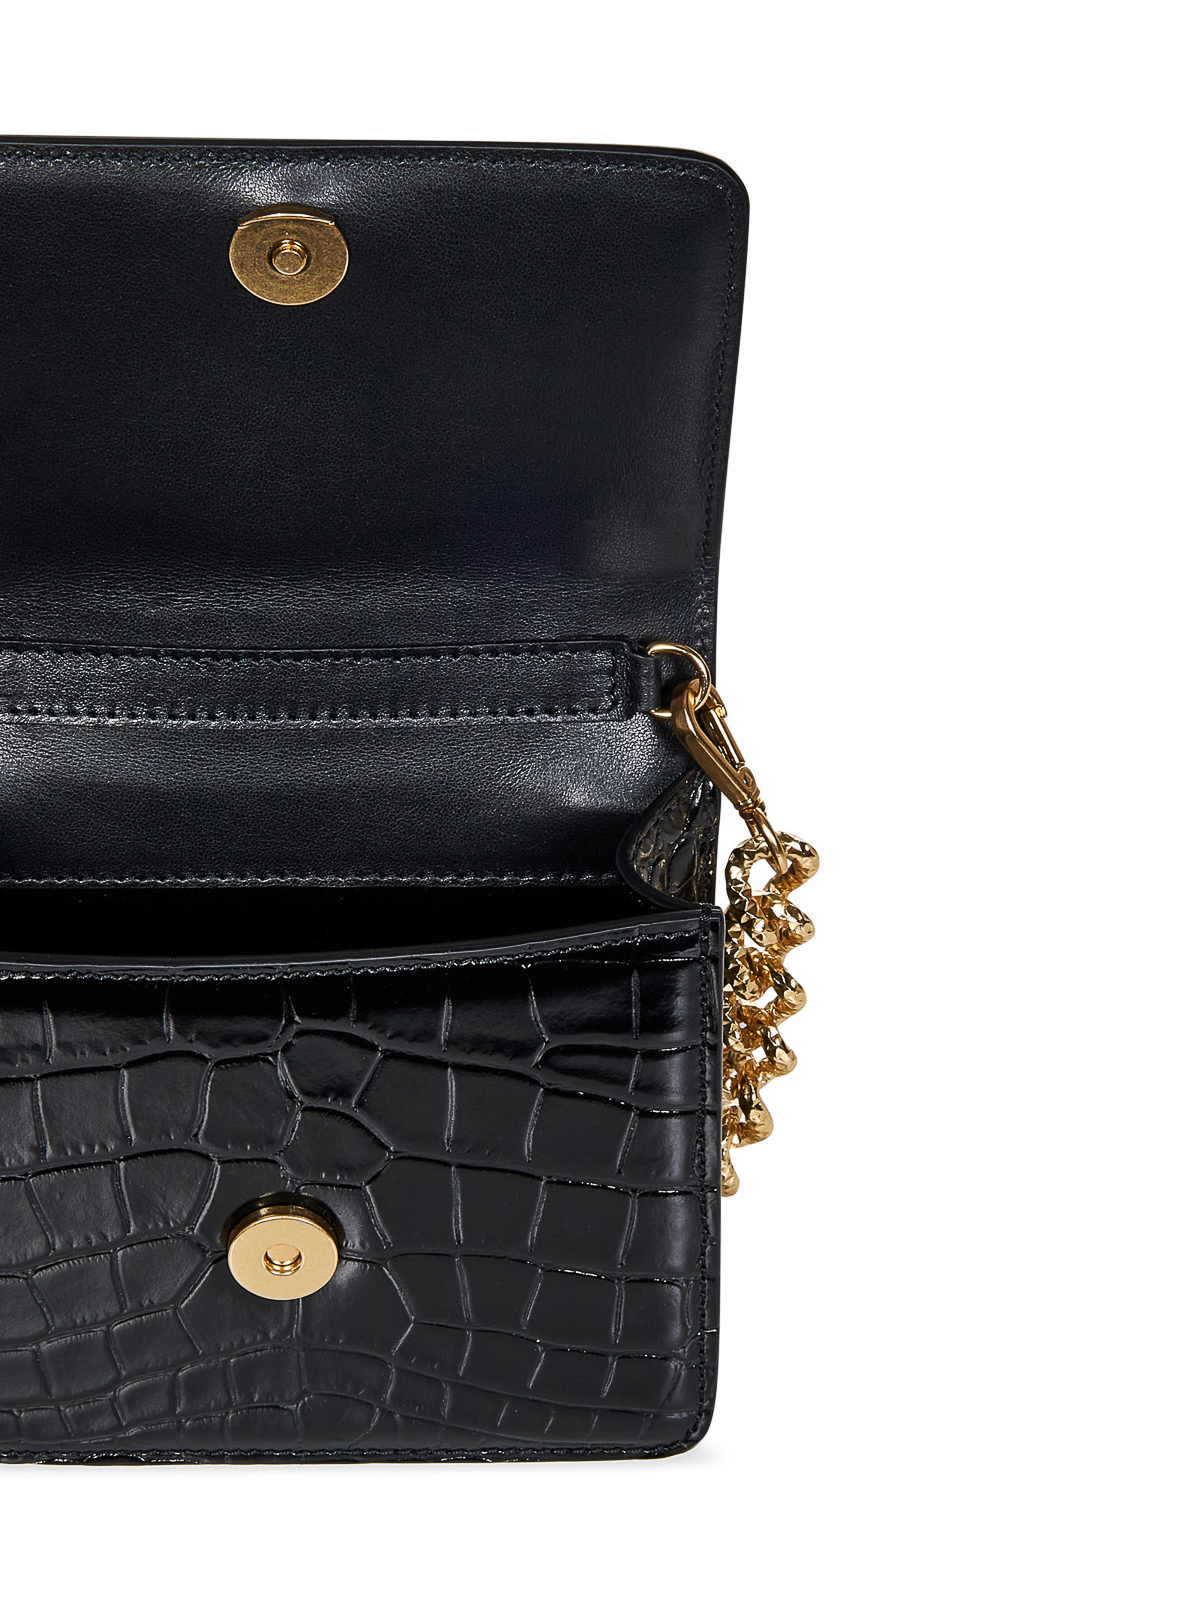 Roberto Cavalli Metallic Gold Crocodile Embossed Leather Bag